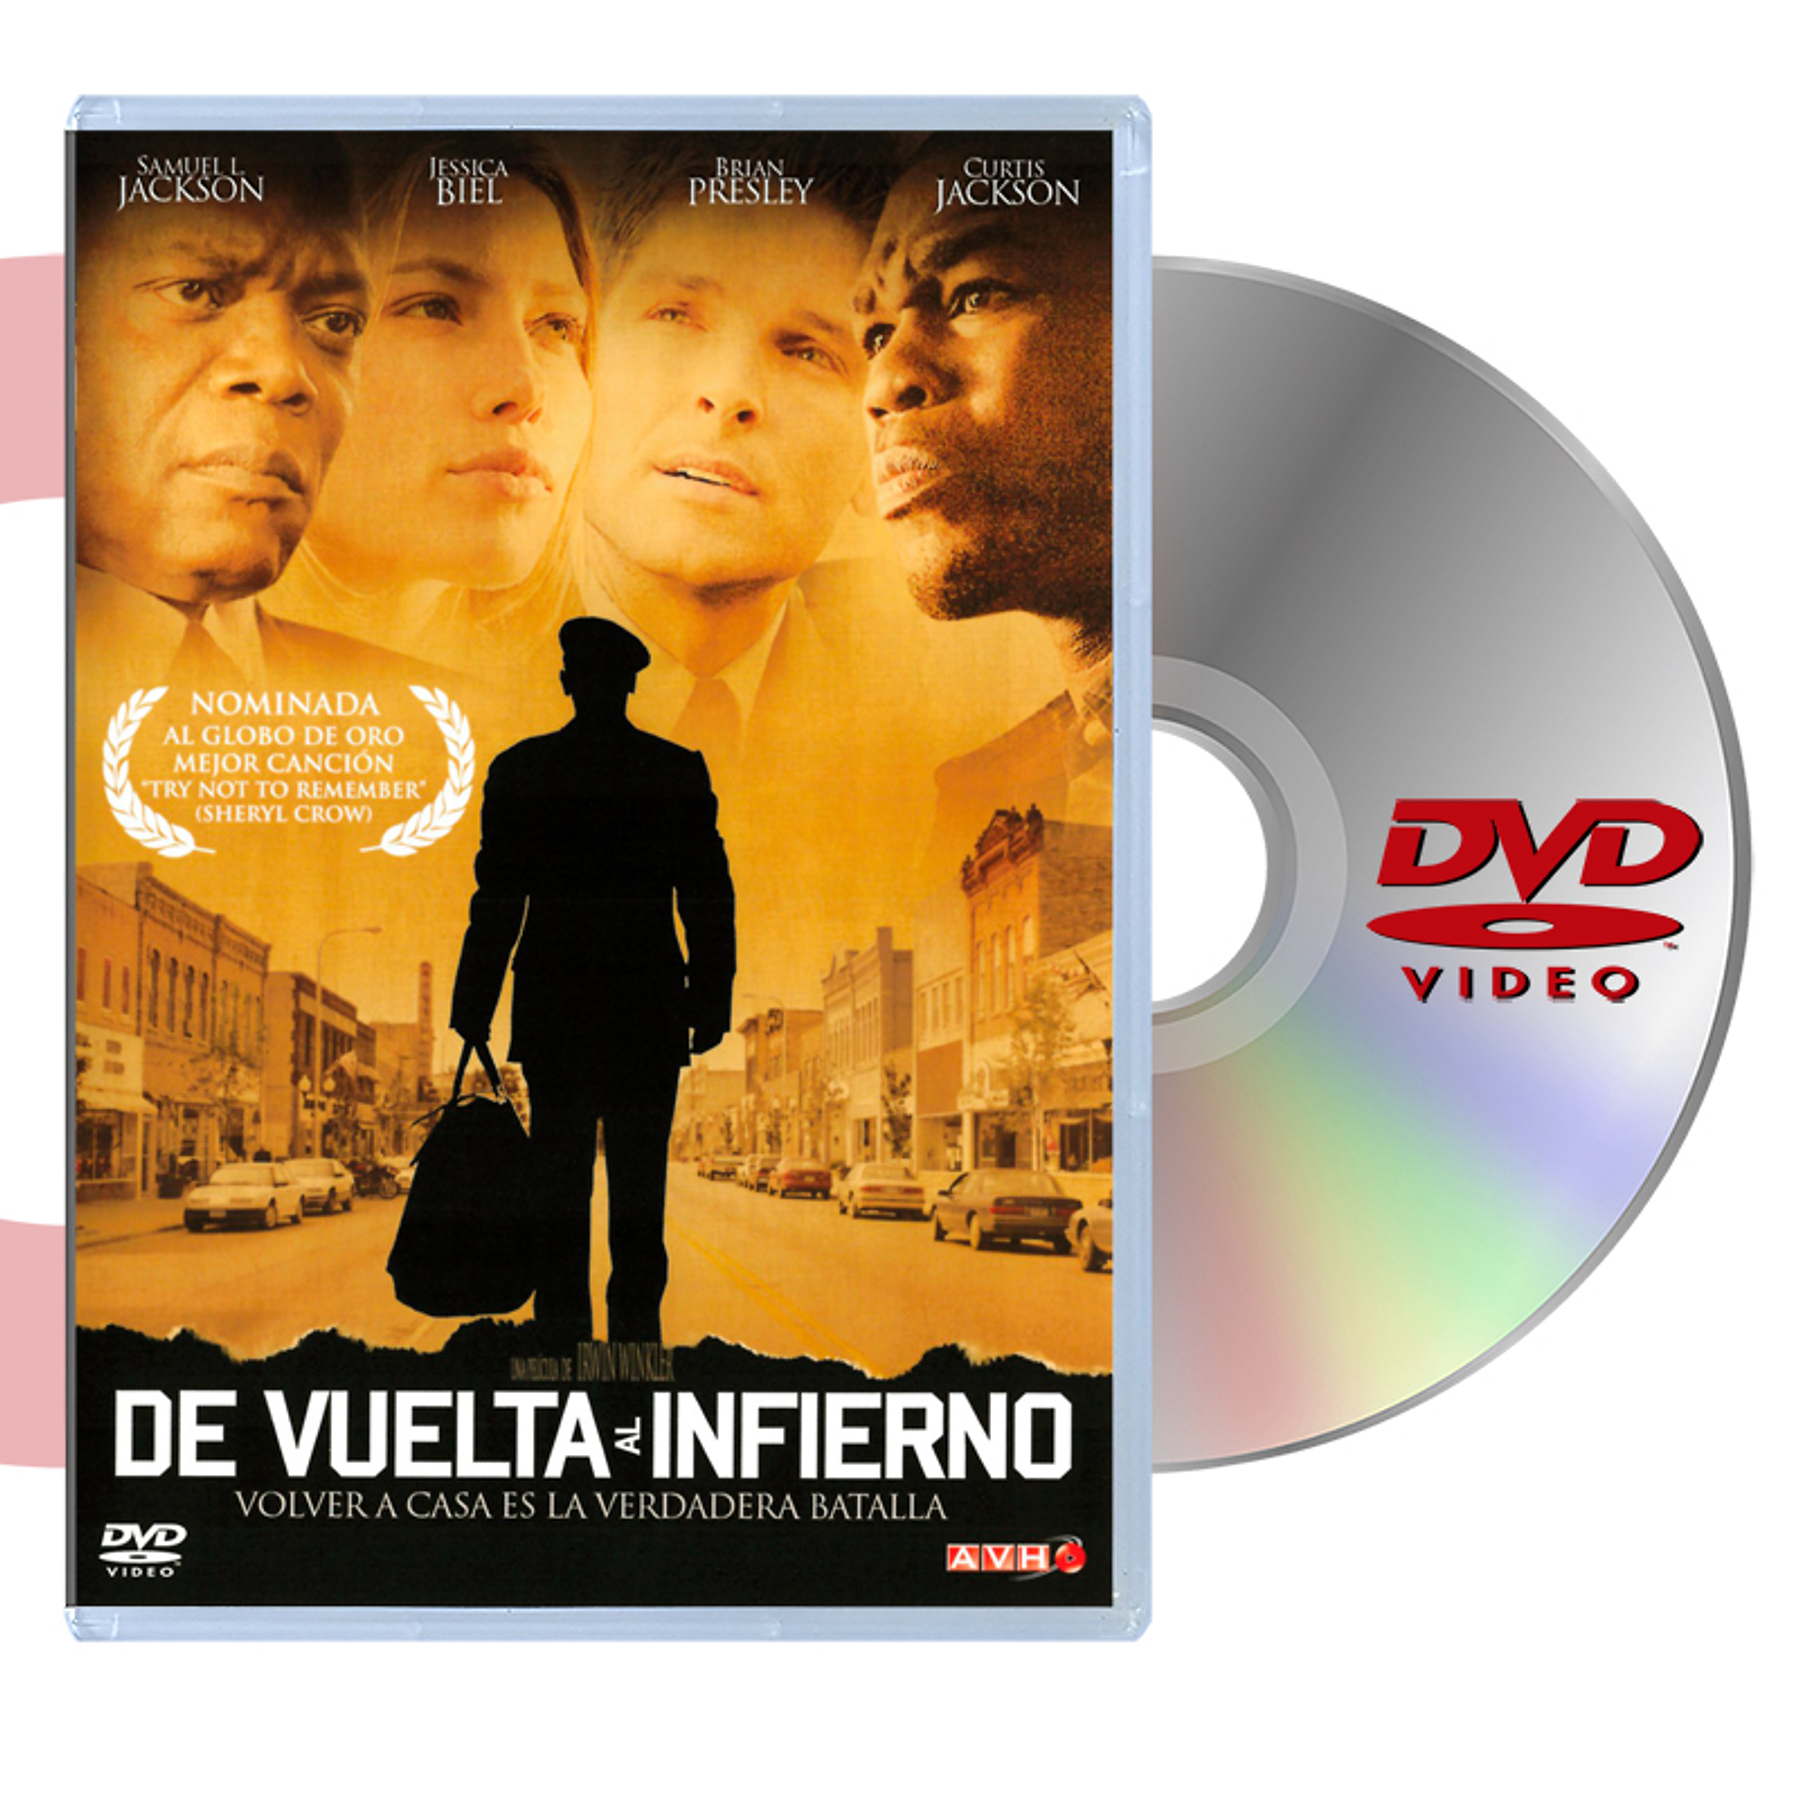 DVD DE VUELTA AL INFIERNO